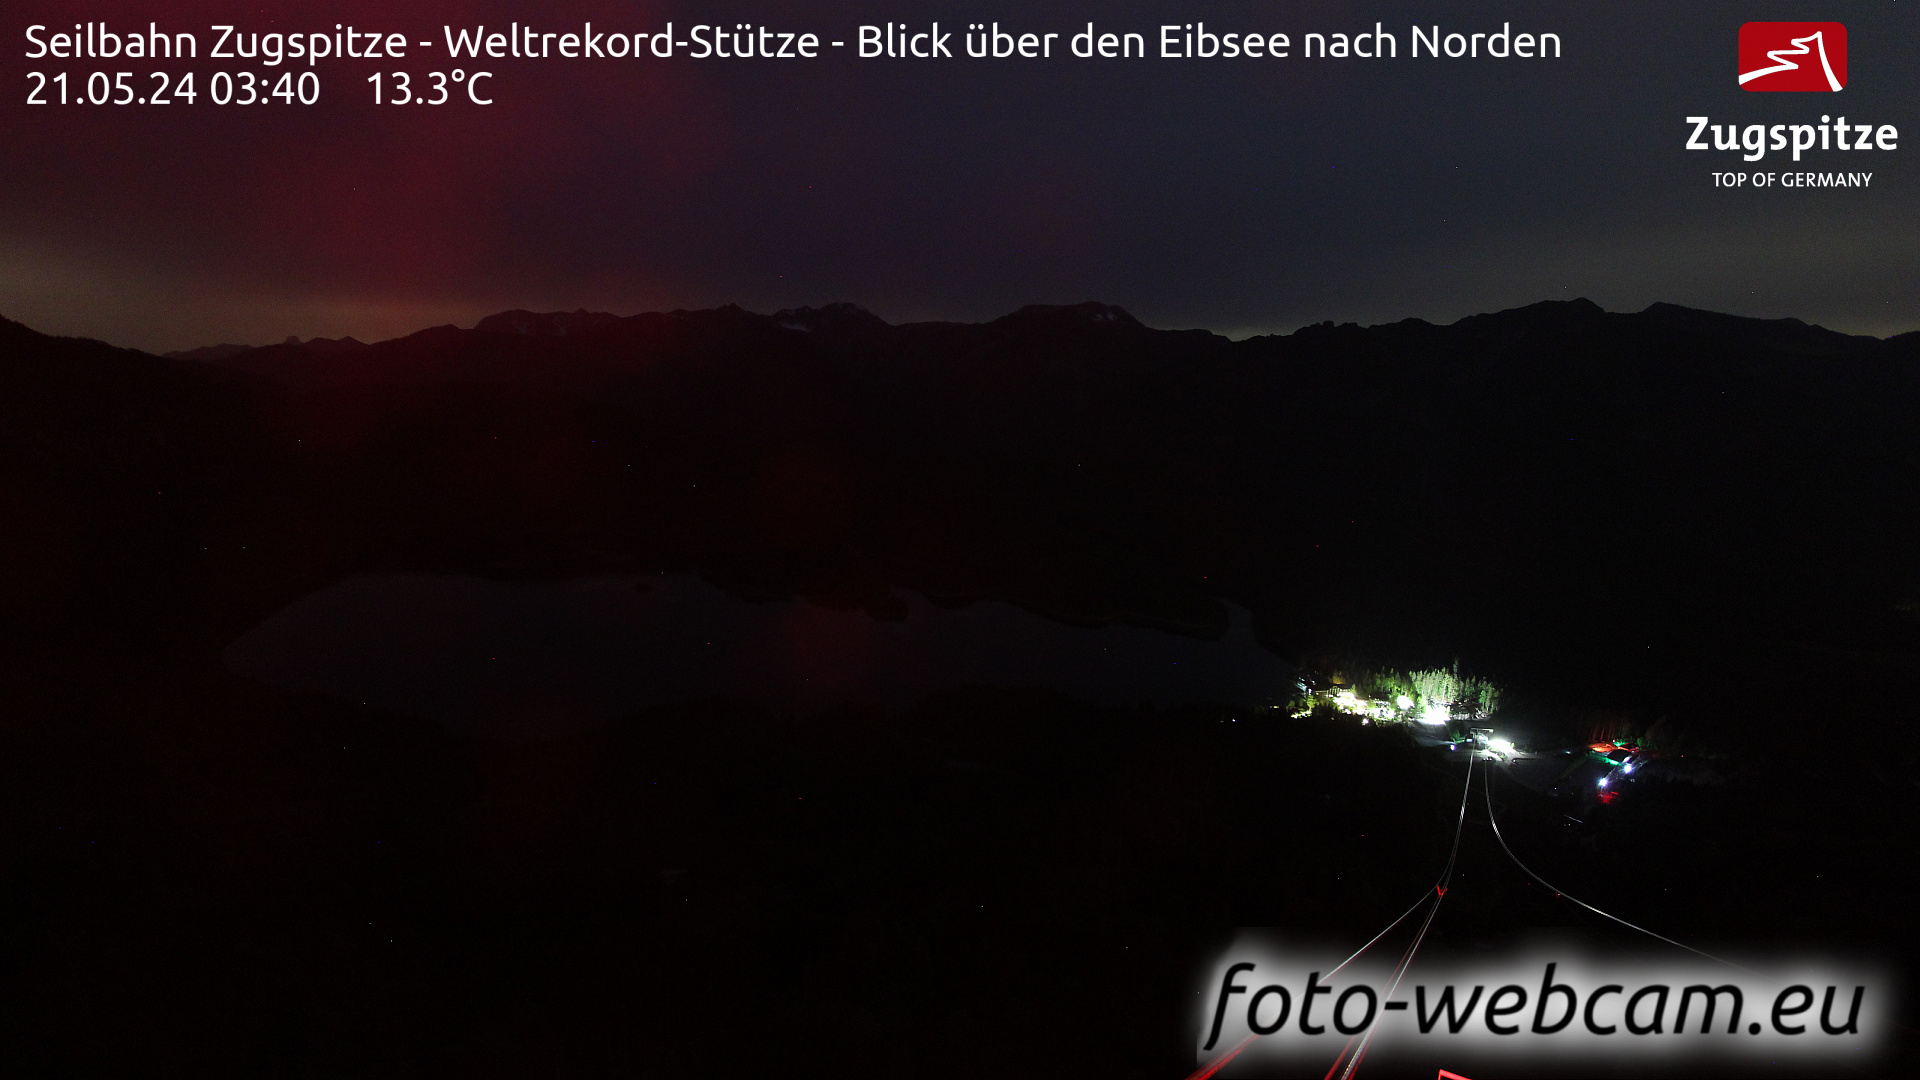 Zugspitze Thu. 03:49